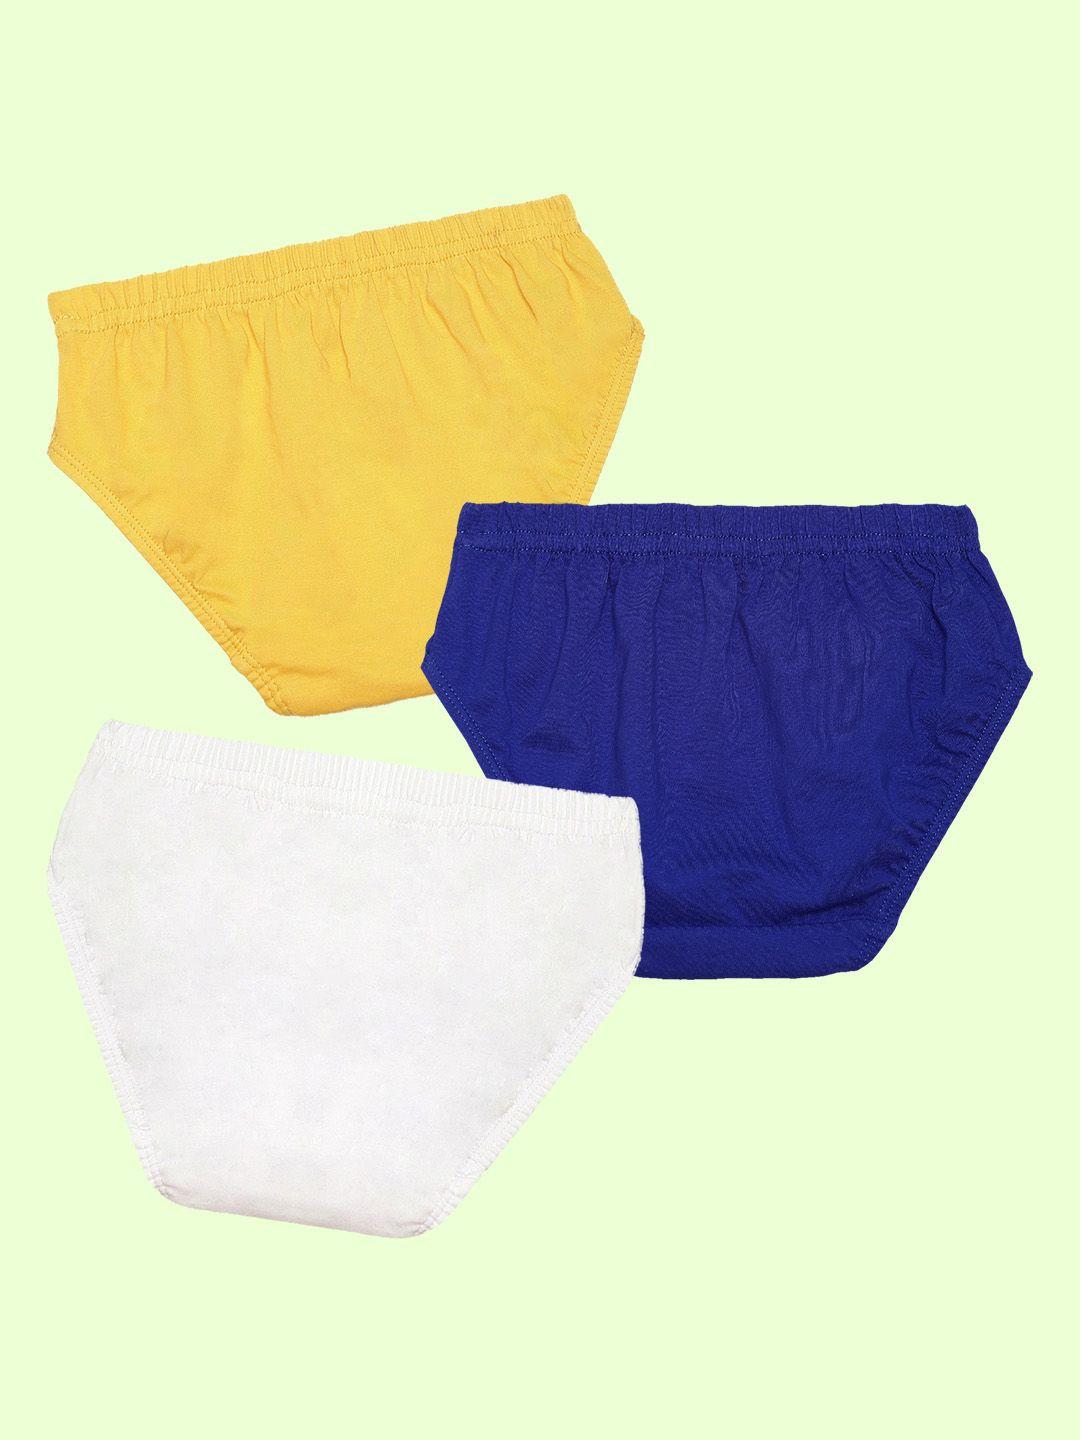 nusyl boys pack of 3 pure cotton basic briefs nubcbrfpo3.0065